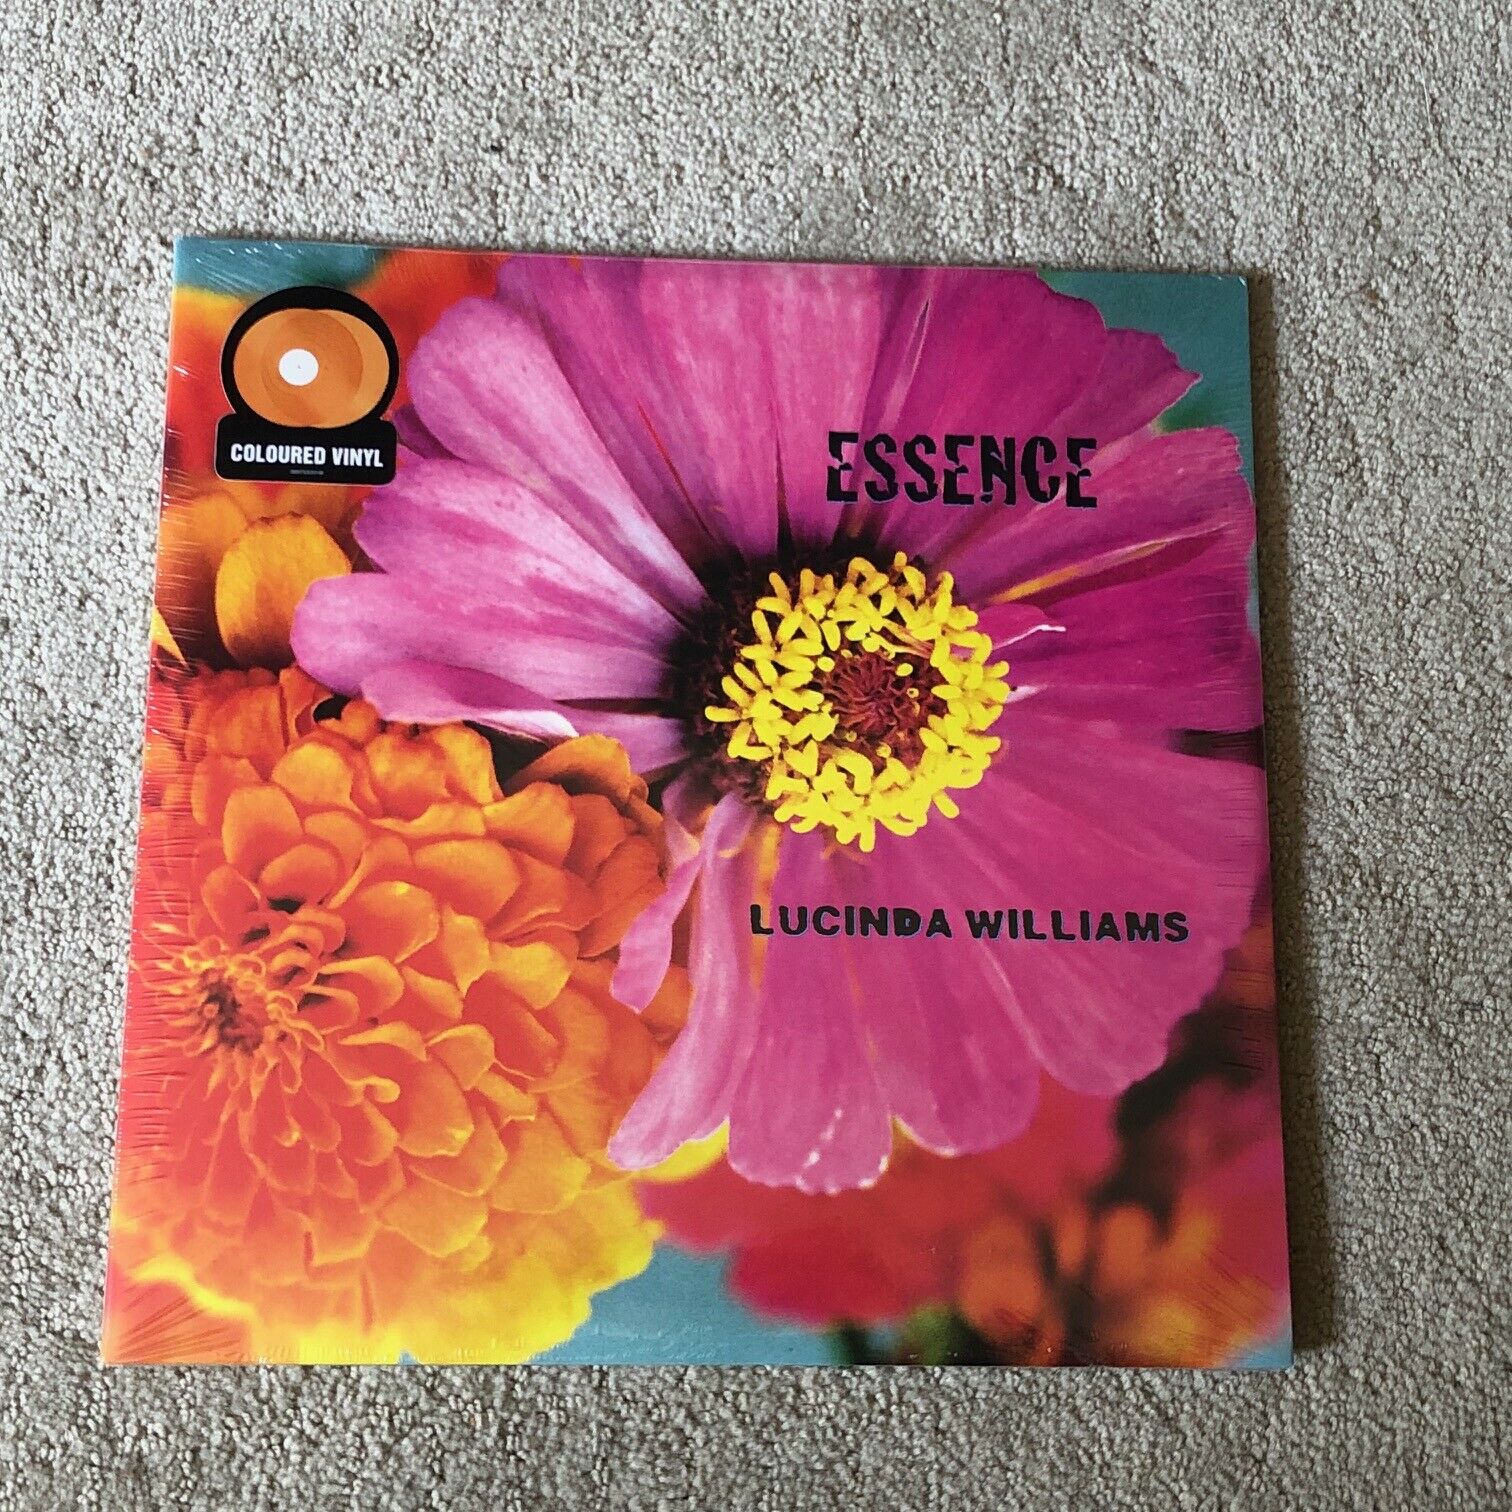 - Lucinda Williams Essence Orange Vinyl Sealed - auction details